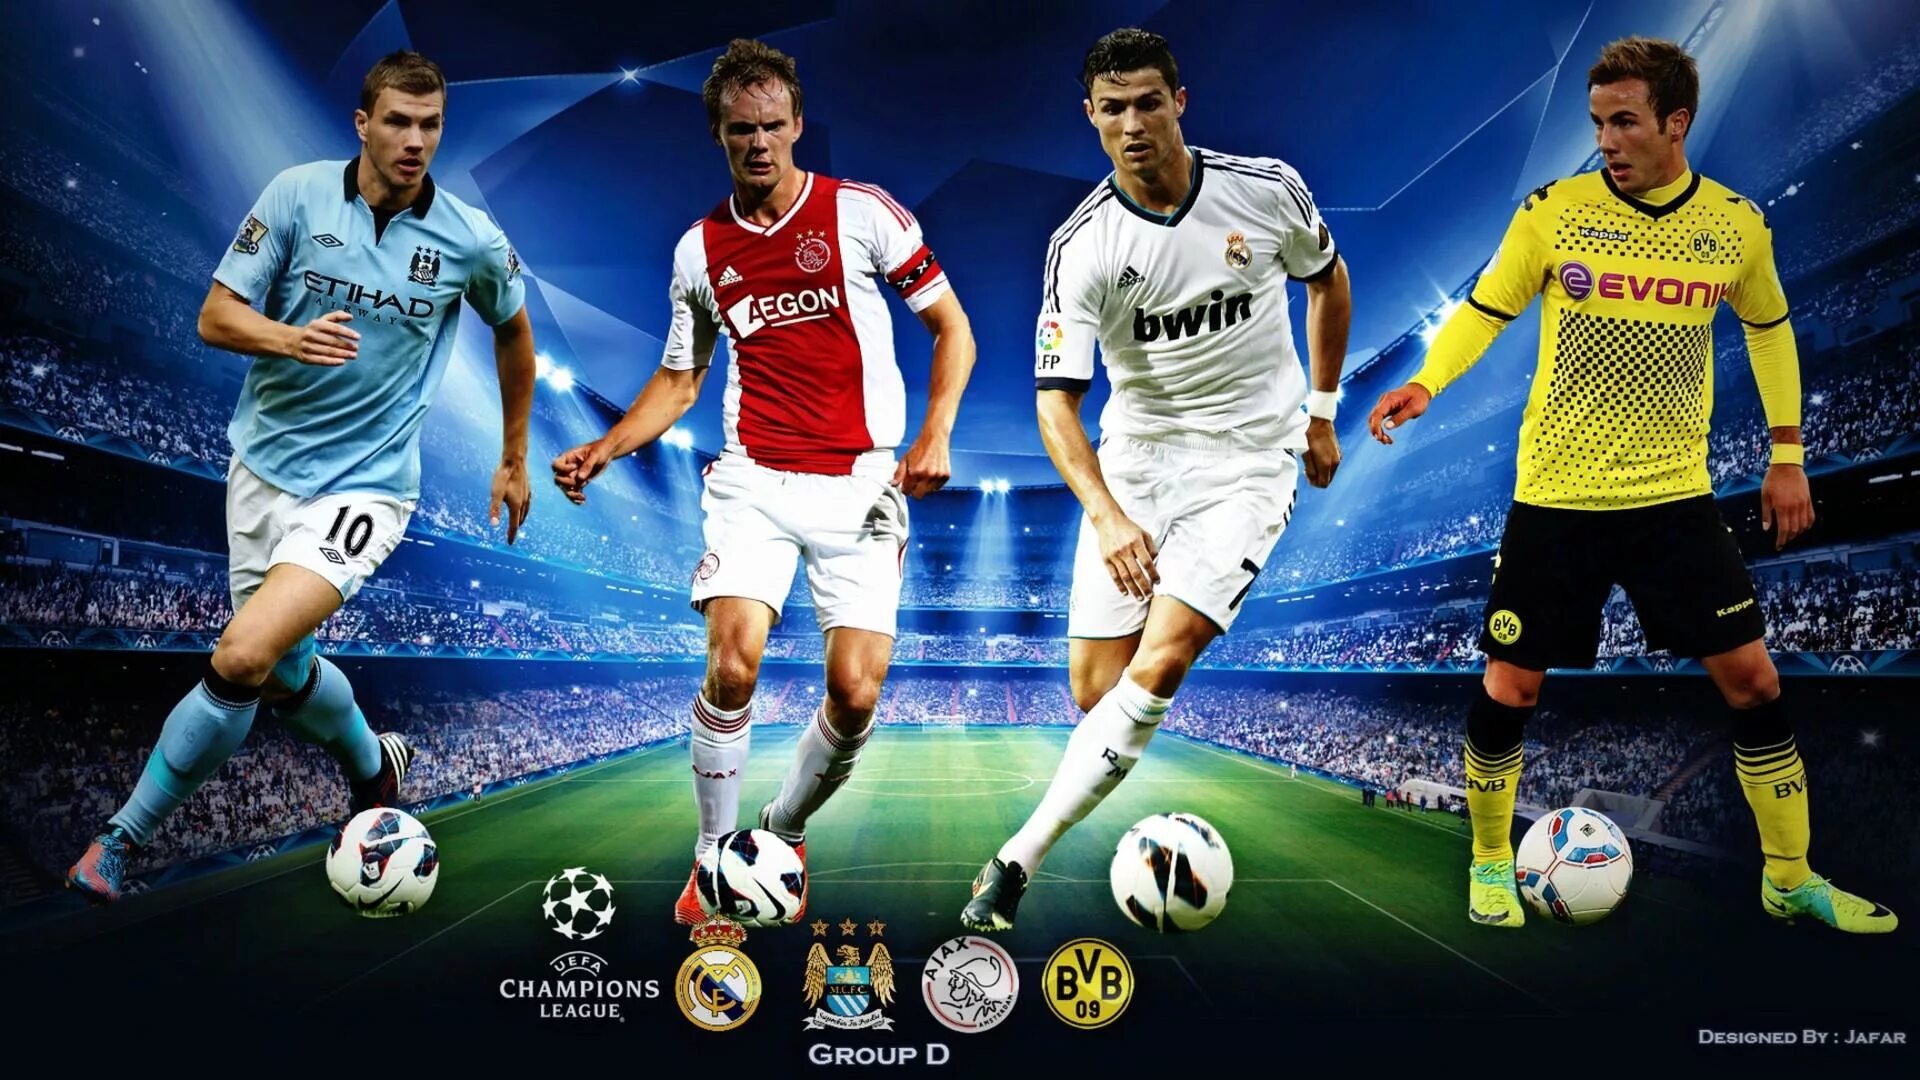 Players league. Футболисты. Футбольные обои. League of Champions Soccer. Football Champions League.